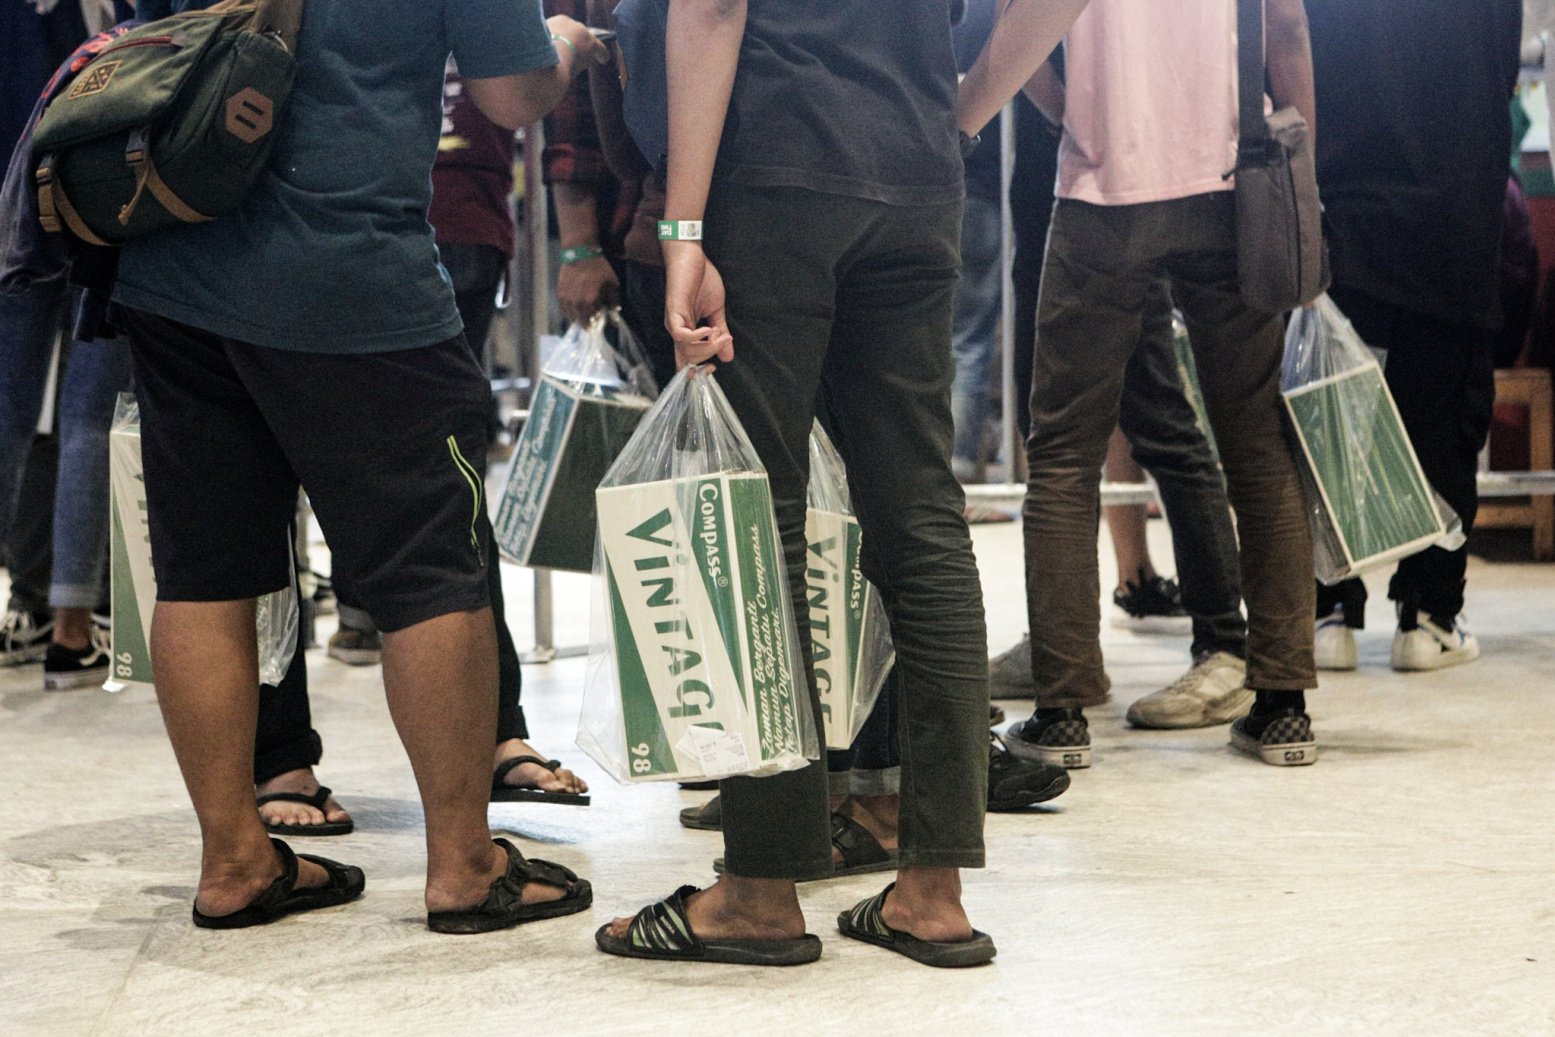 Seorang pengunjung menenteng kantong belanjaan sepatu Compass dalam bazar Urban Sneaker Society di ke Plaza Gedung District 8, SCBD, Jakarta Selatan (08/11/2019). Terdapat beberapa brand sepatu yang merilis produk hasil kolaborasi eksklusifnya, diantaranya sepatu Compass, Untold, Rafheoo Footwear, hingga G-Shock. Selain itu, ada pula kolaborasi eksklusif seperti ublic Culture, FR2 (Fxxcking Rabbit), Atmos, hingga Round Two by Sean Wotherspoon.